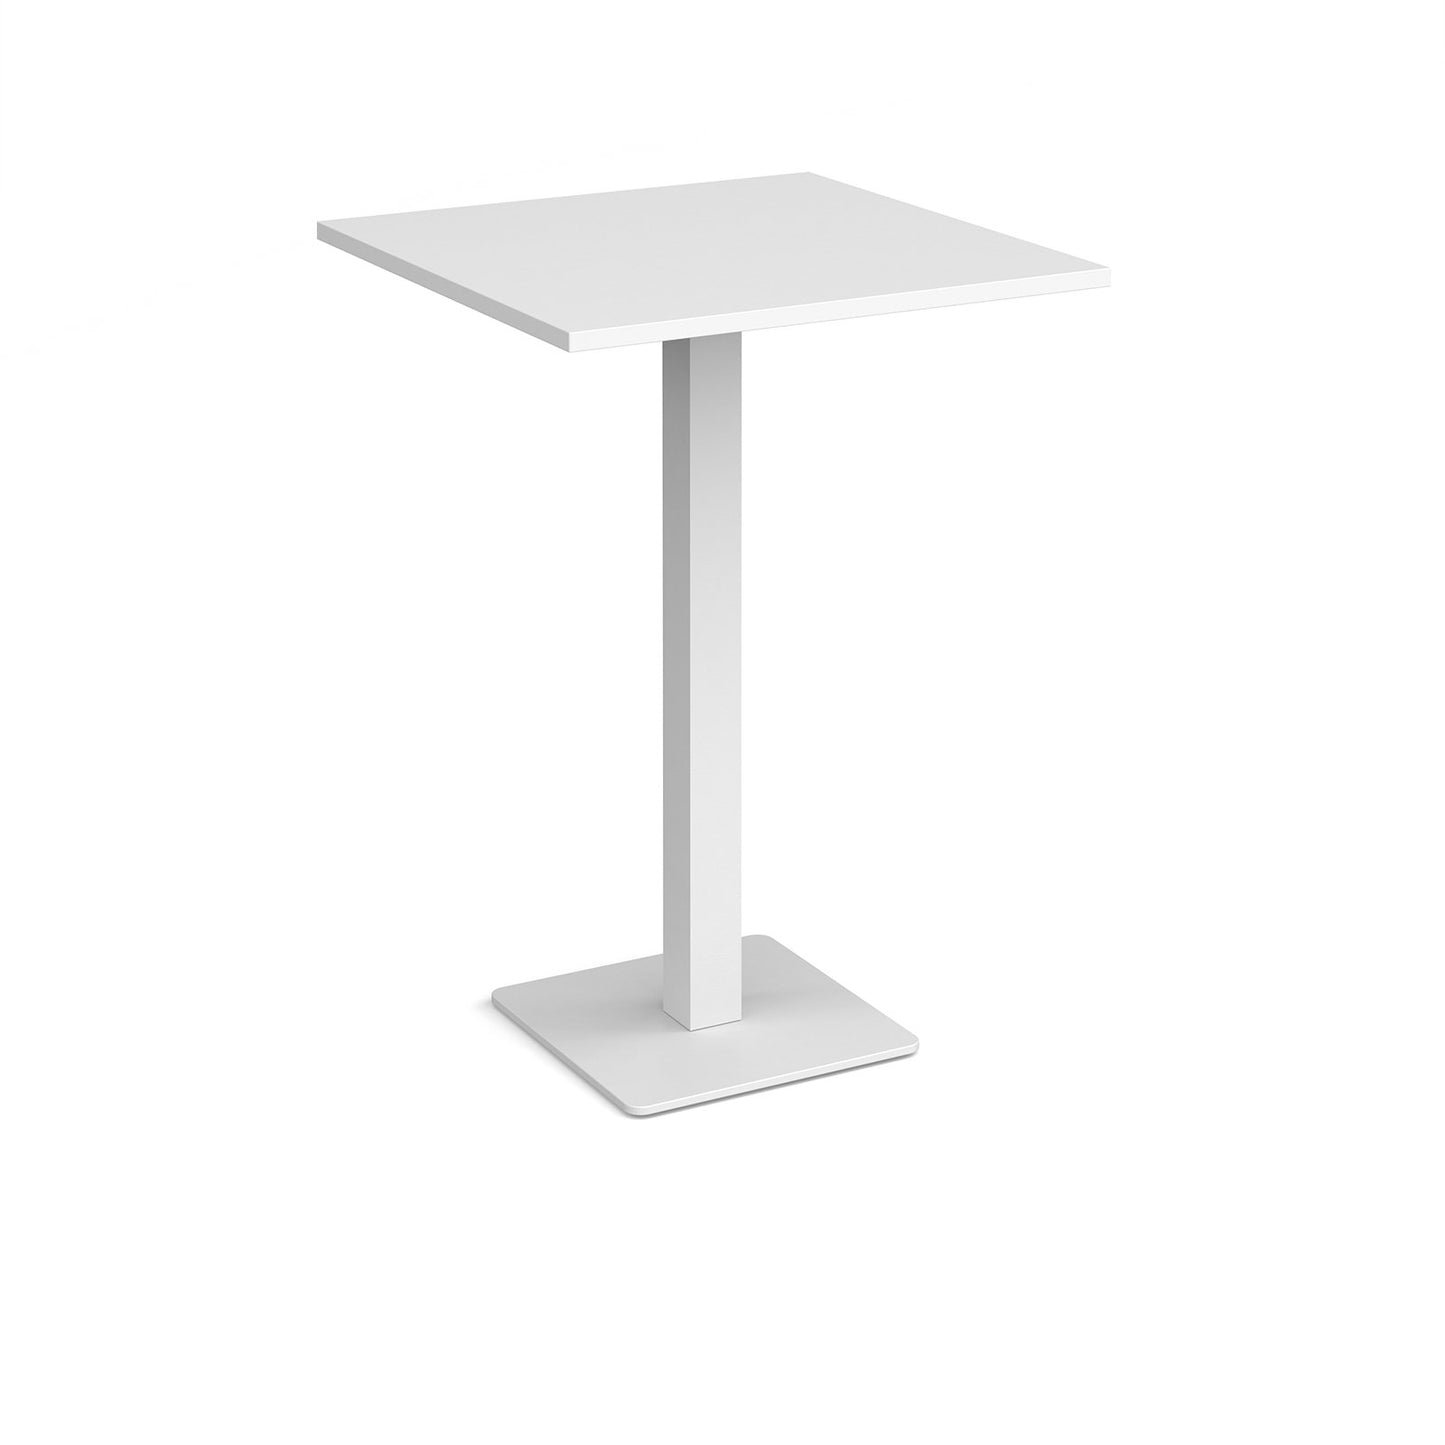 Brescia square poseur table with flat square base